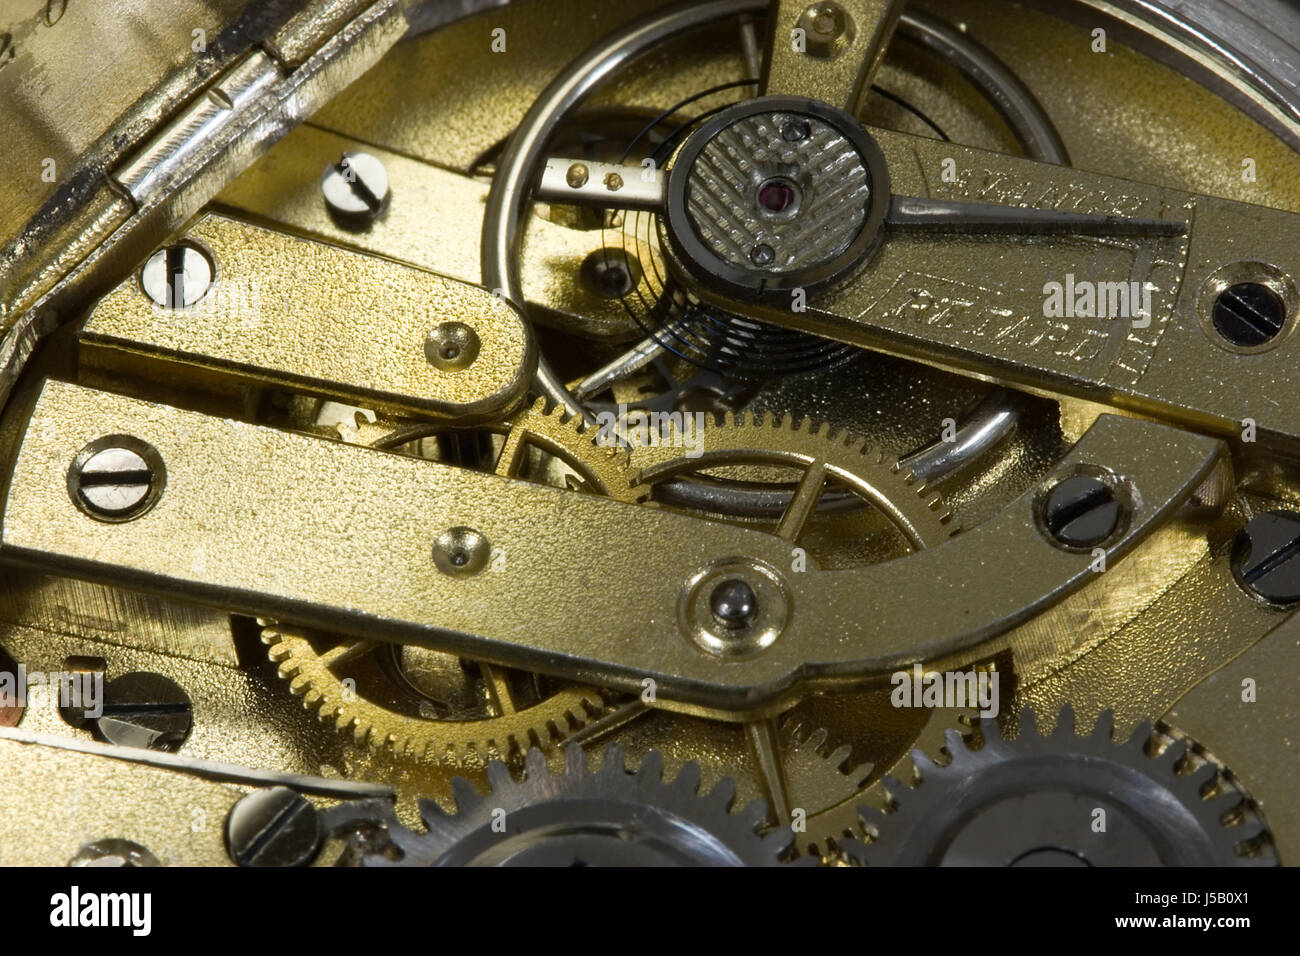 Uhr Zeit Uhrwerk Messing Mechanik Pocket Watch Angst chronometer  Stockfotografie - Alamy